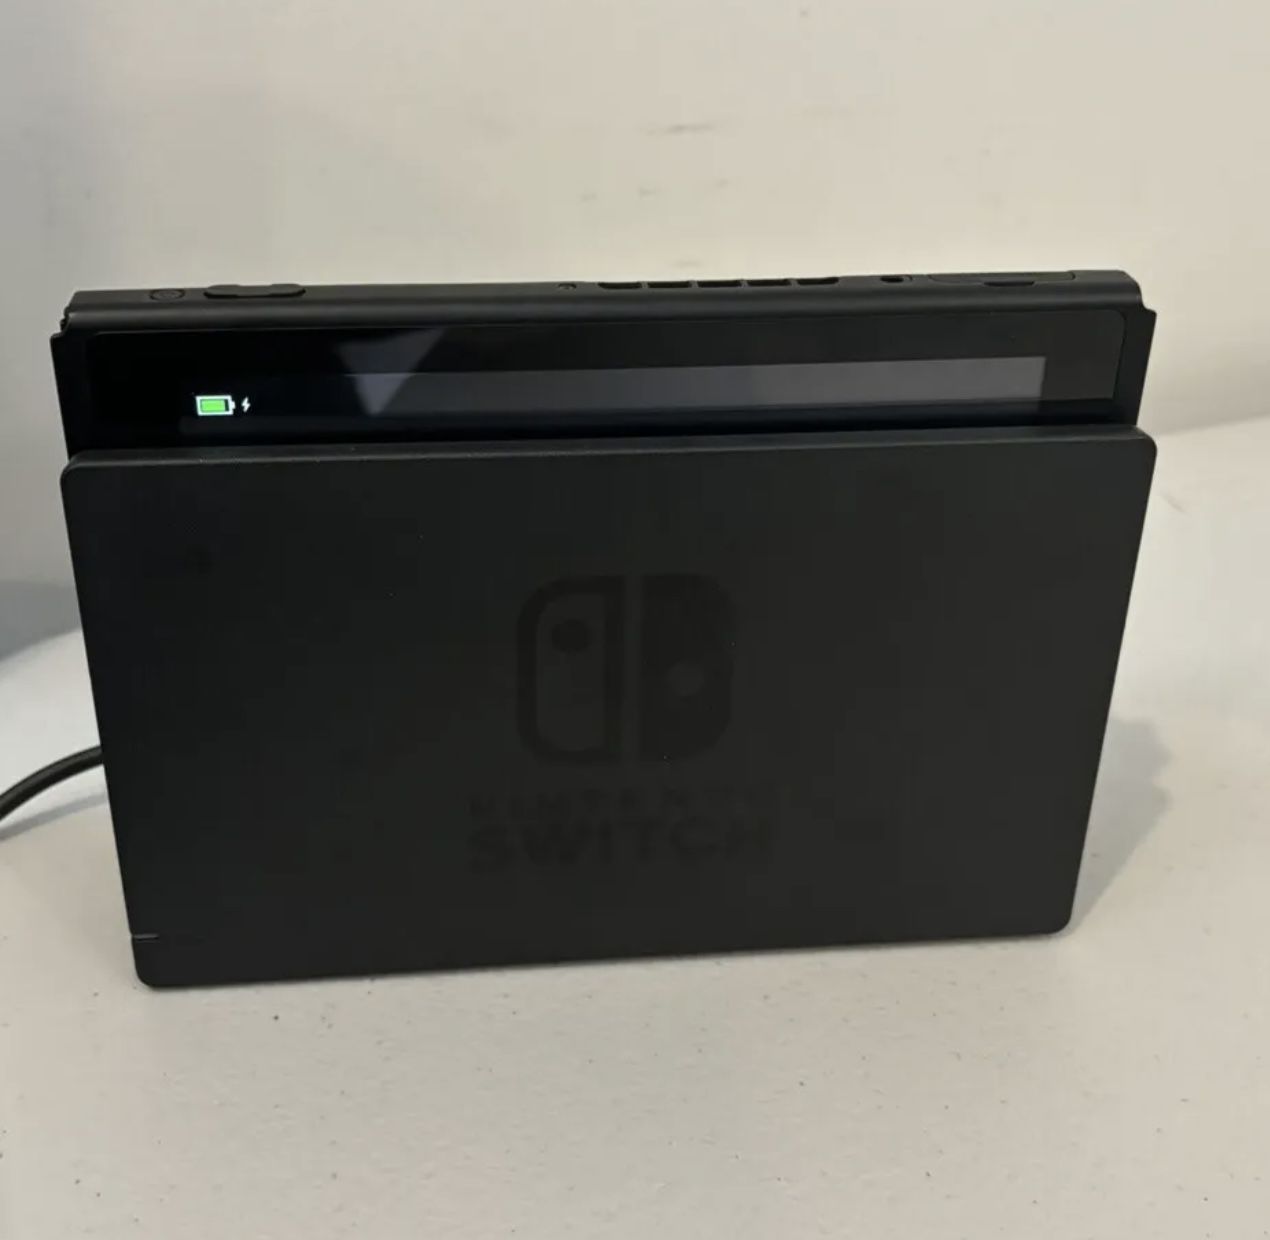 Nintendo Switch (used)